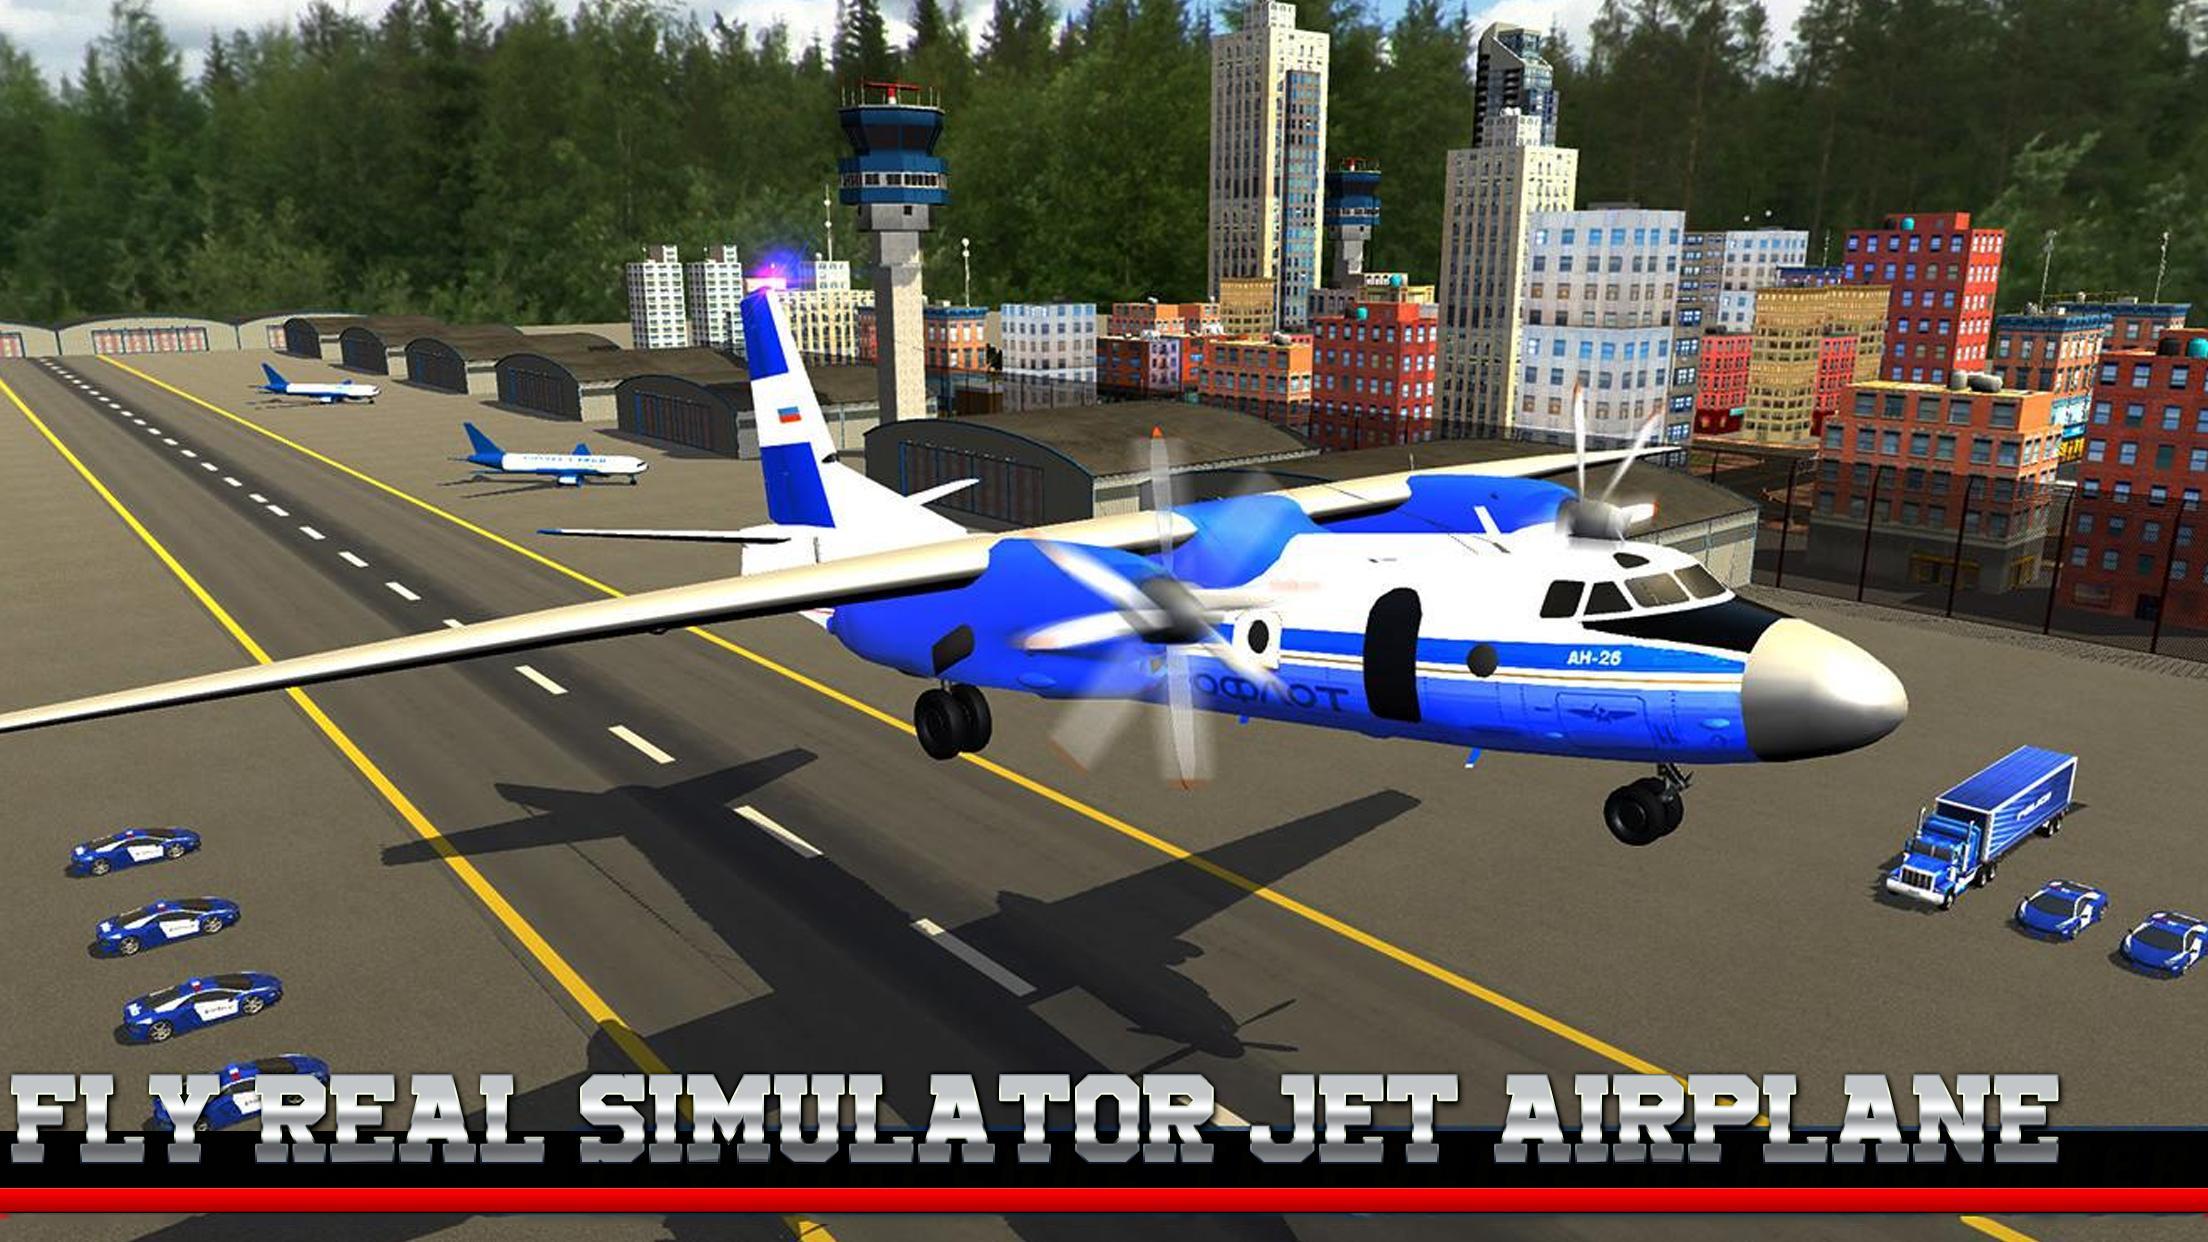 Infinite flight simulator free download for pc windows 10